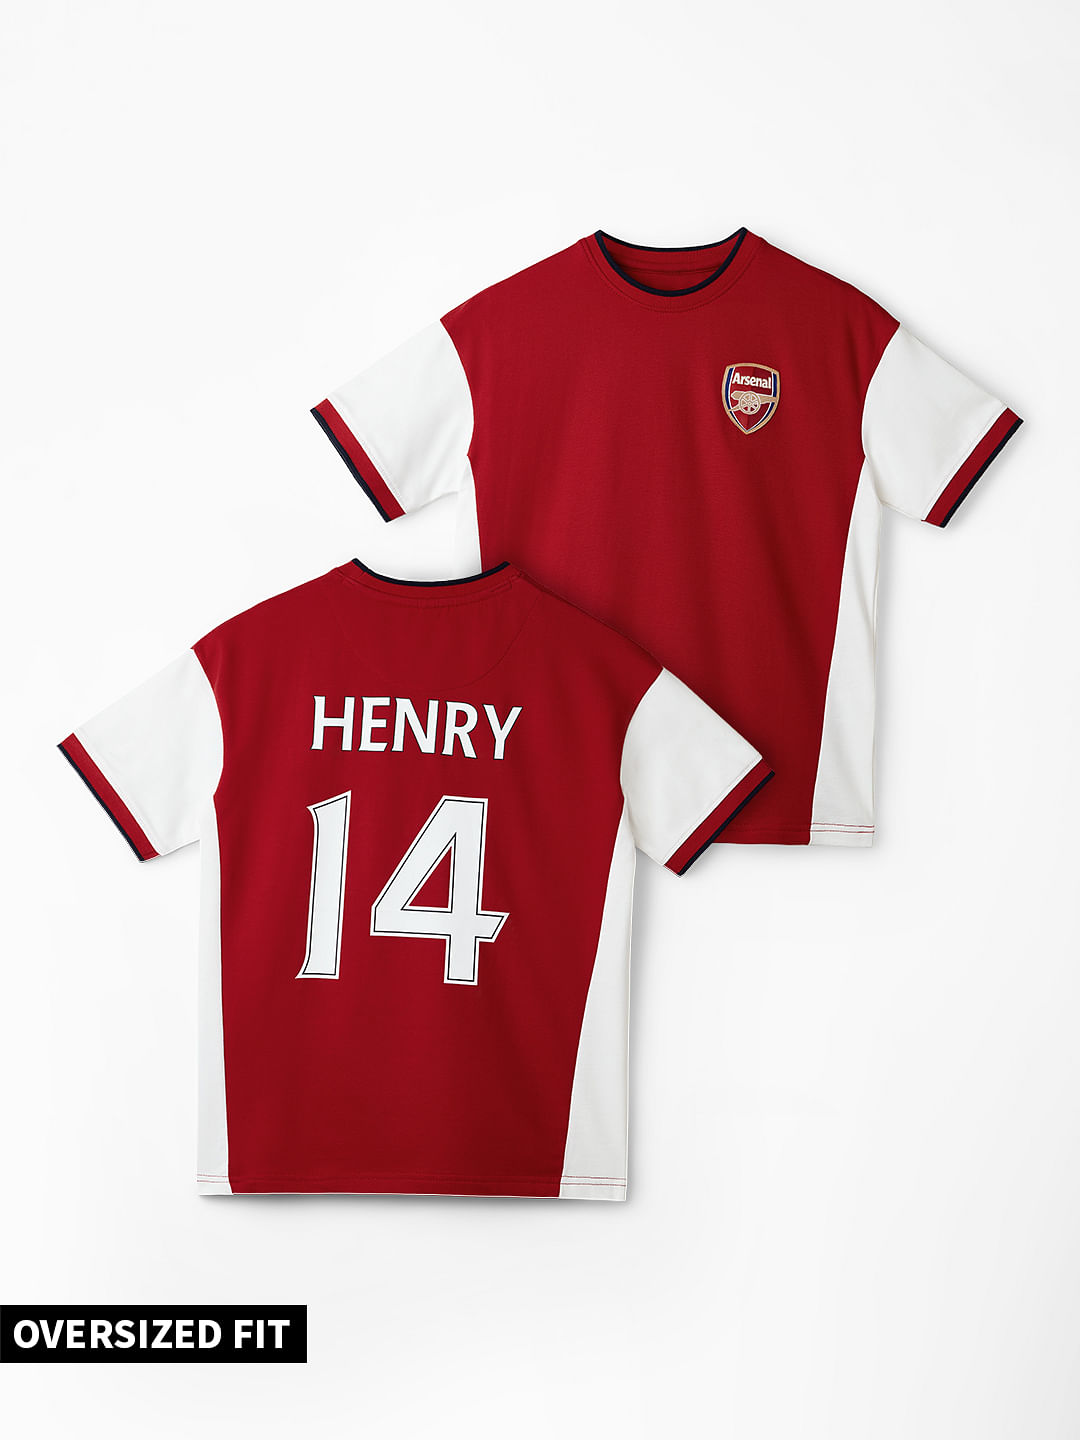 Arsenal FC: Henry Boys Oversized T-Shirts